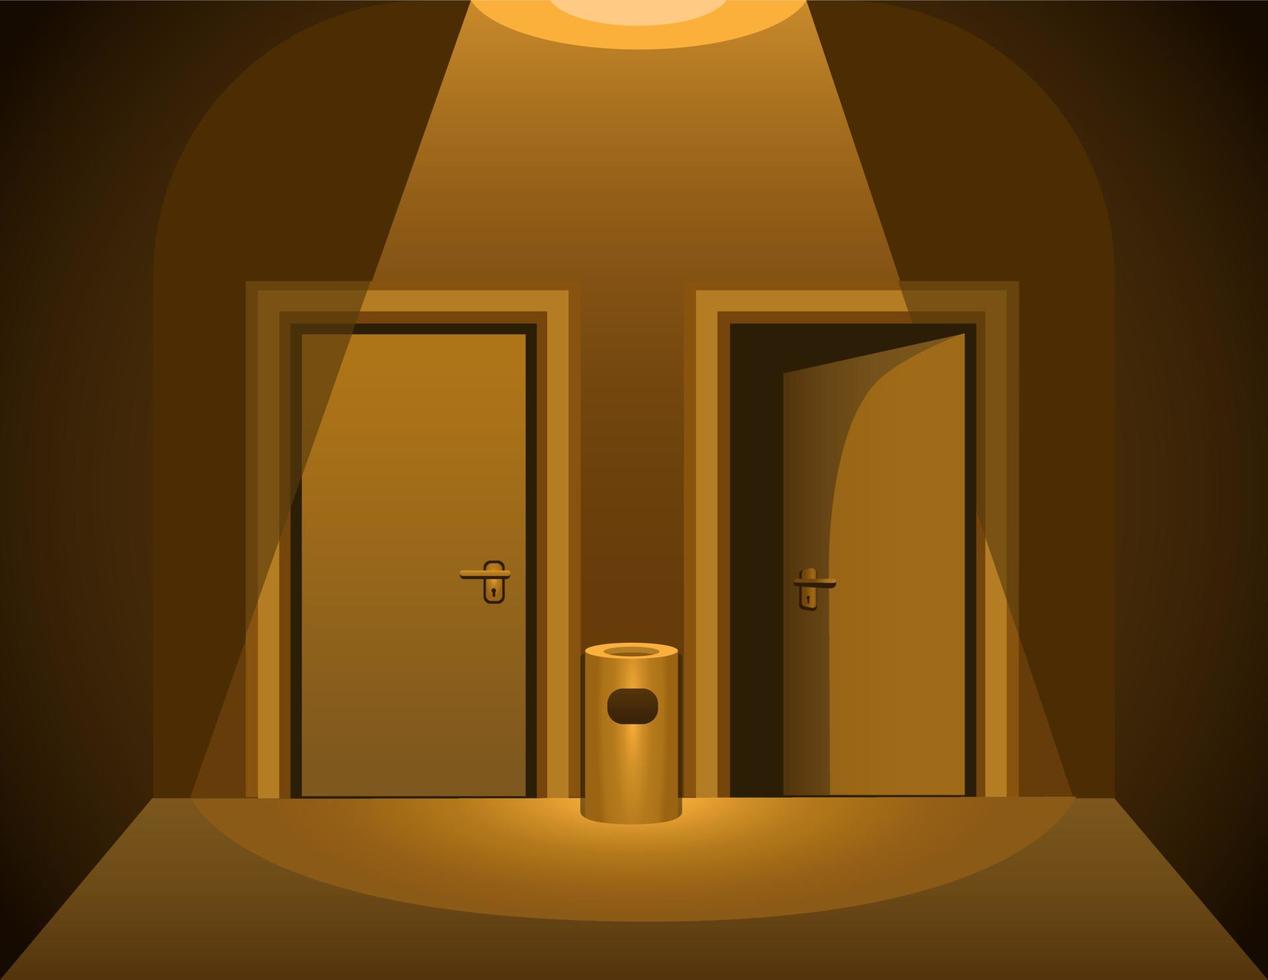 dos puerta oscuro habitación. baño o hotel habitación horror escena antecedentes ilustración vector